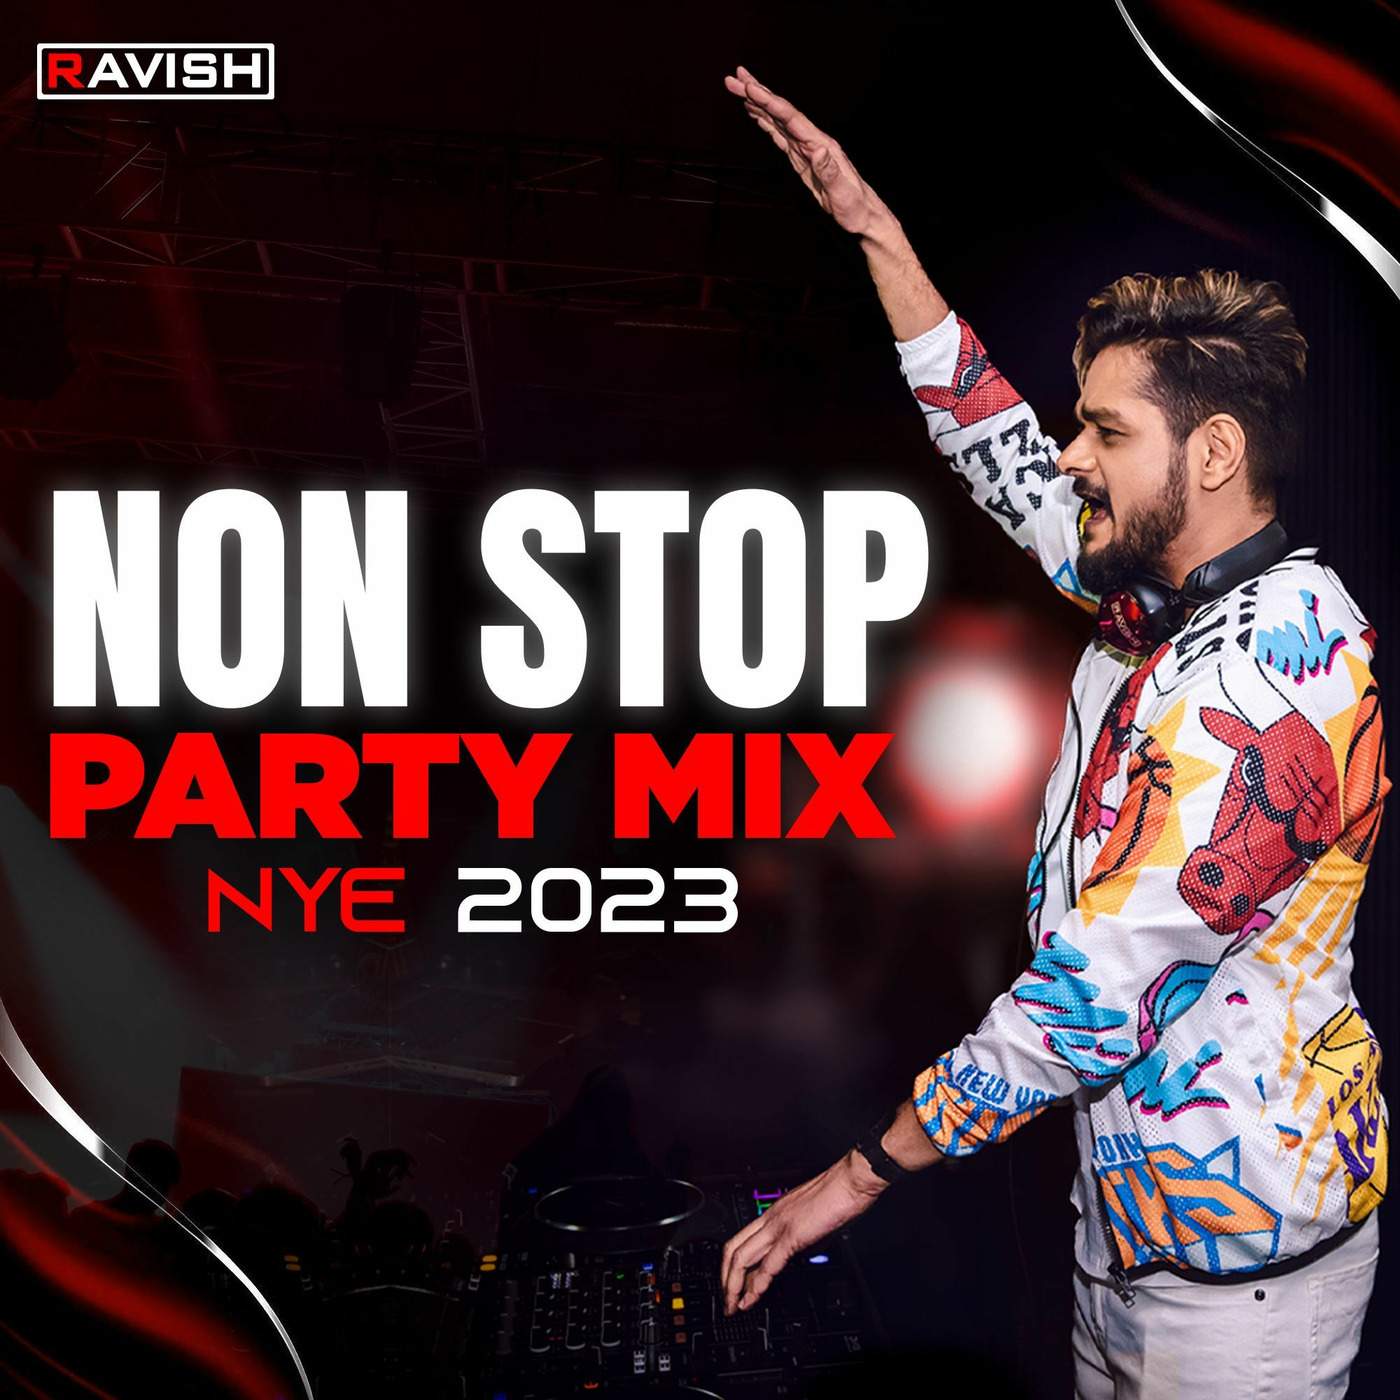 New Year Party Mix 2023 - DJ Ravish (Non Stop Party Mix)